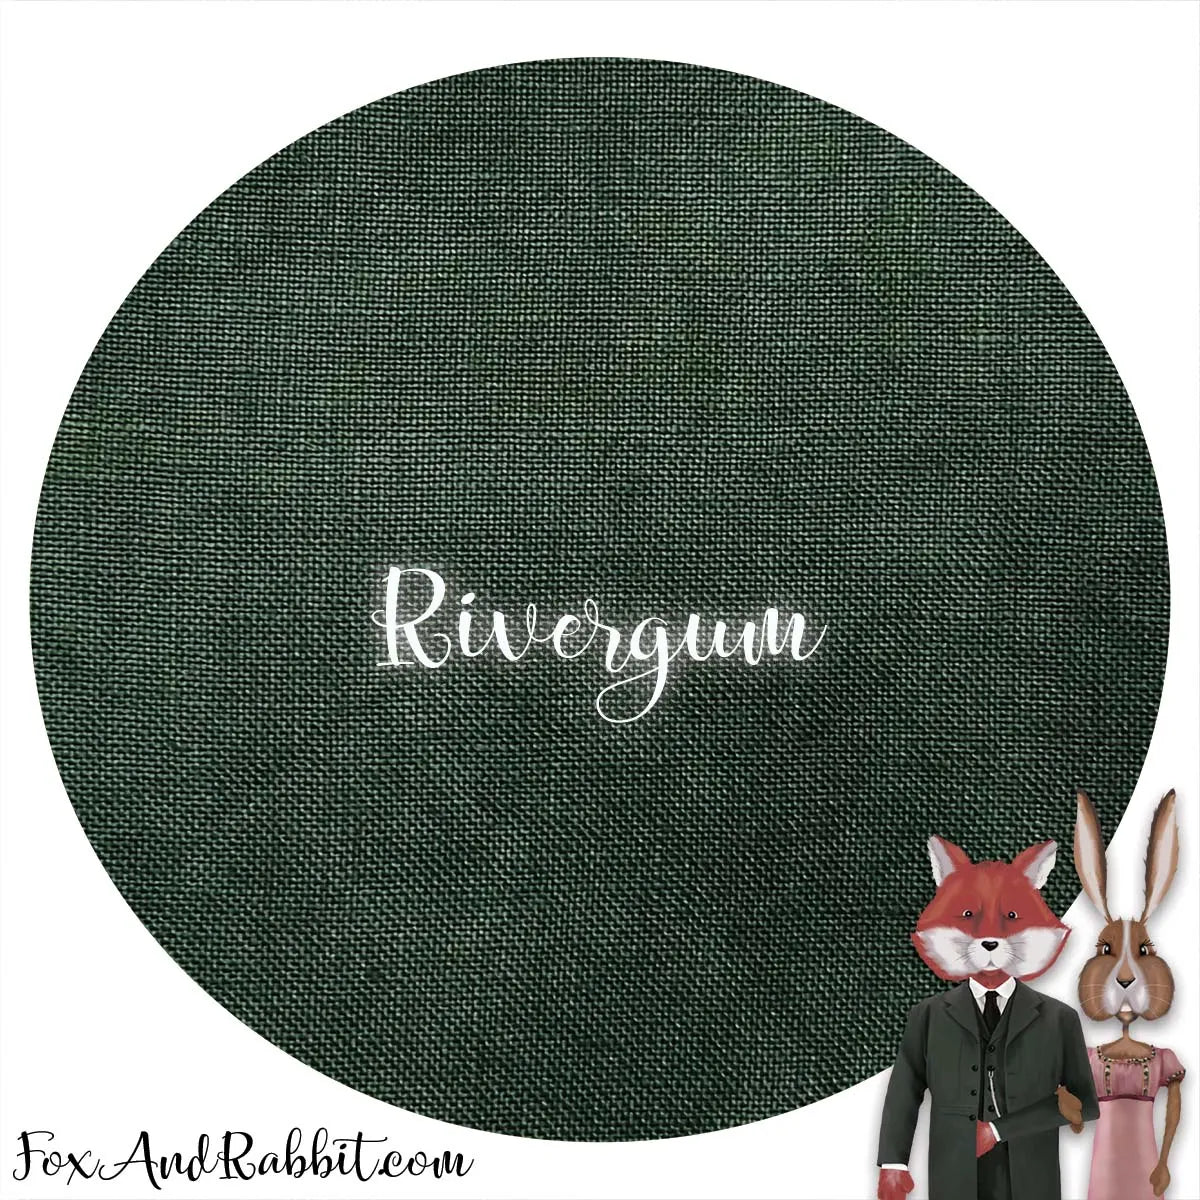 46 Count Rivergum Fox and Rabbit